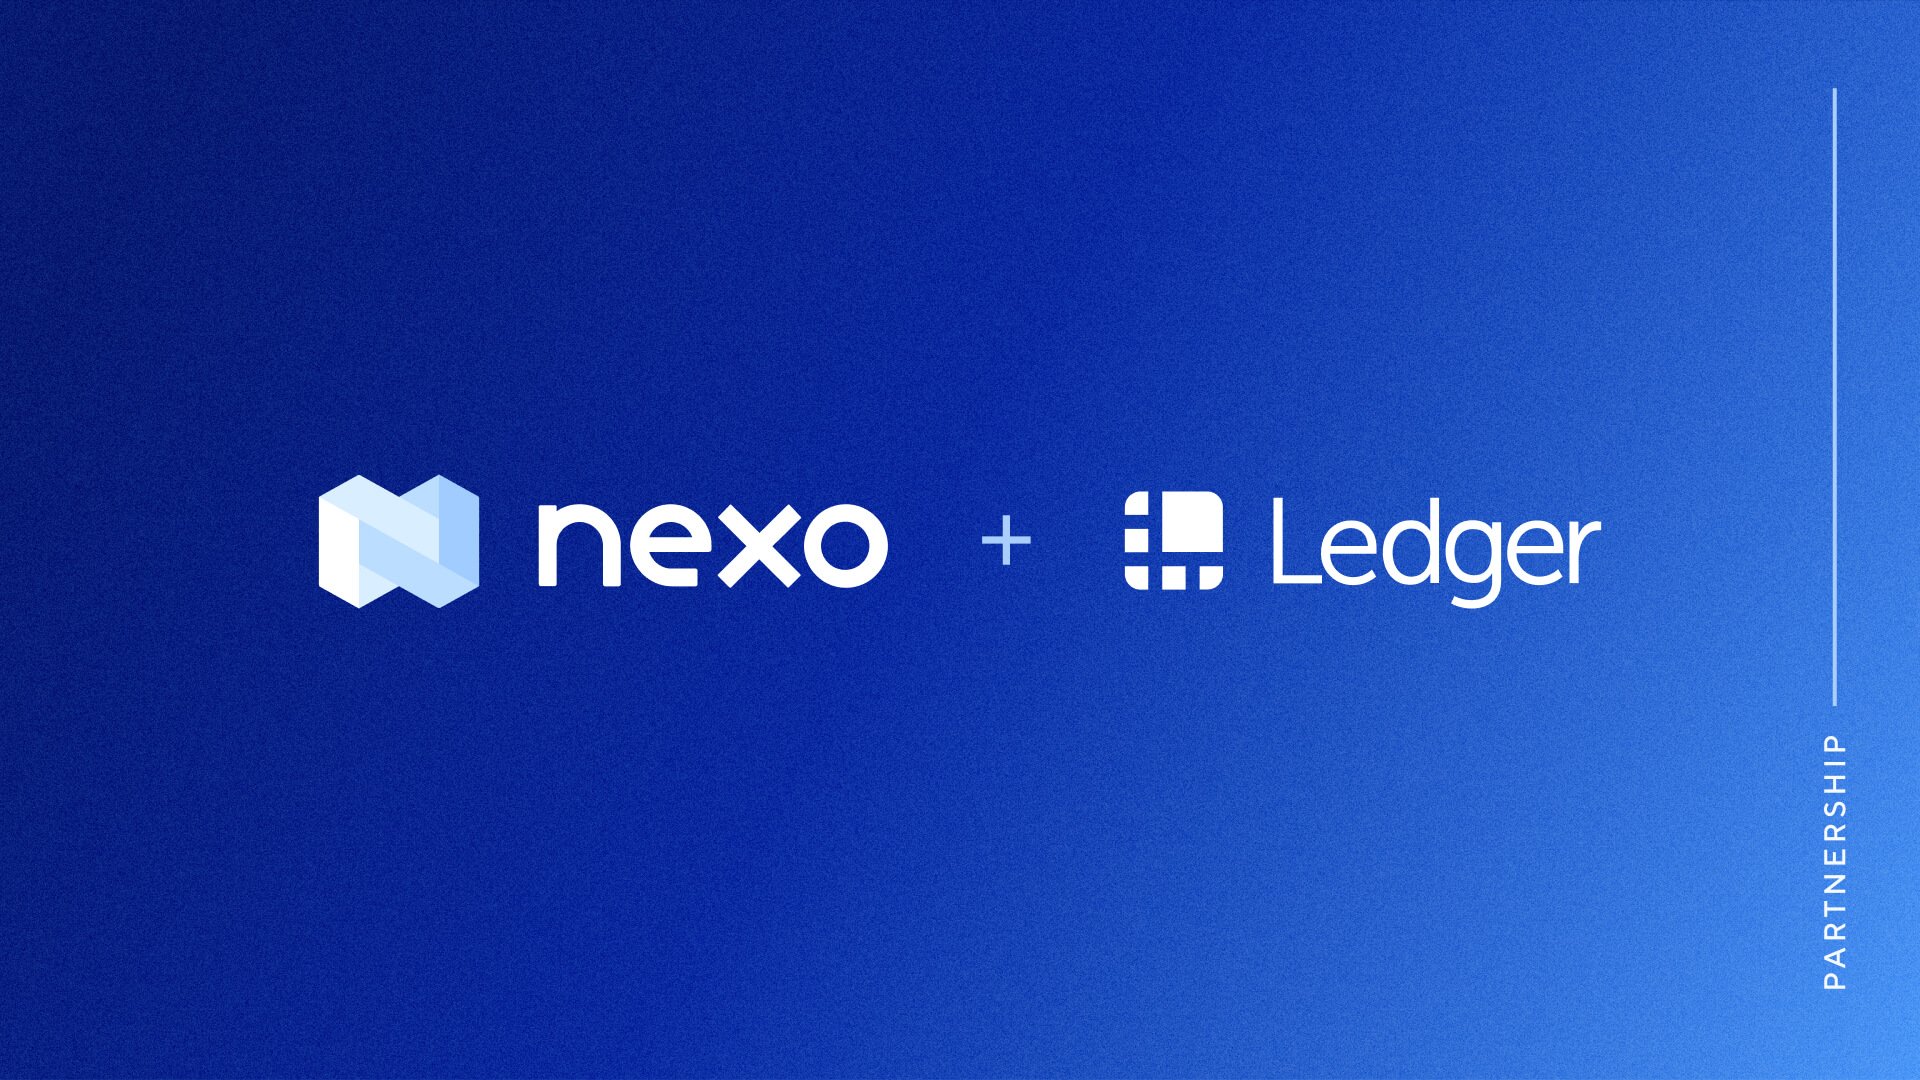 Ledger Vault社との提携により、Nexo社のセキュリティインフラは拡大しています。